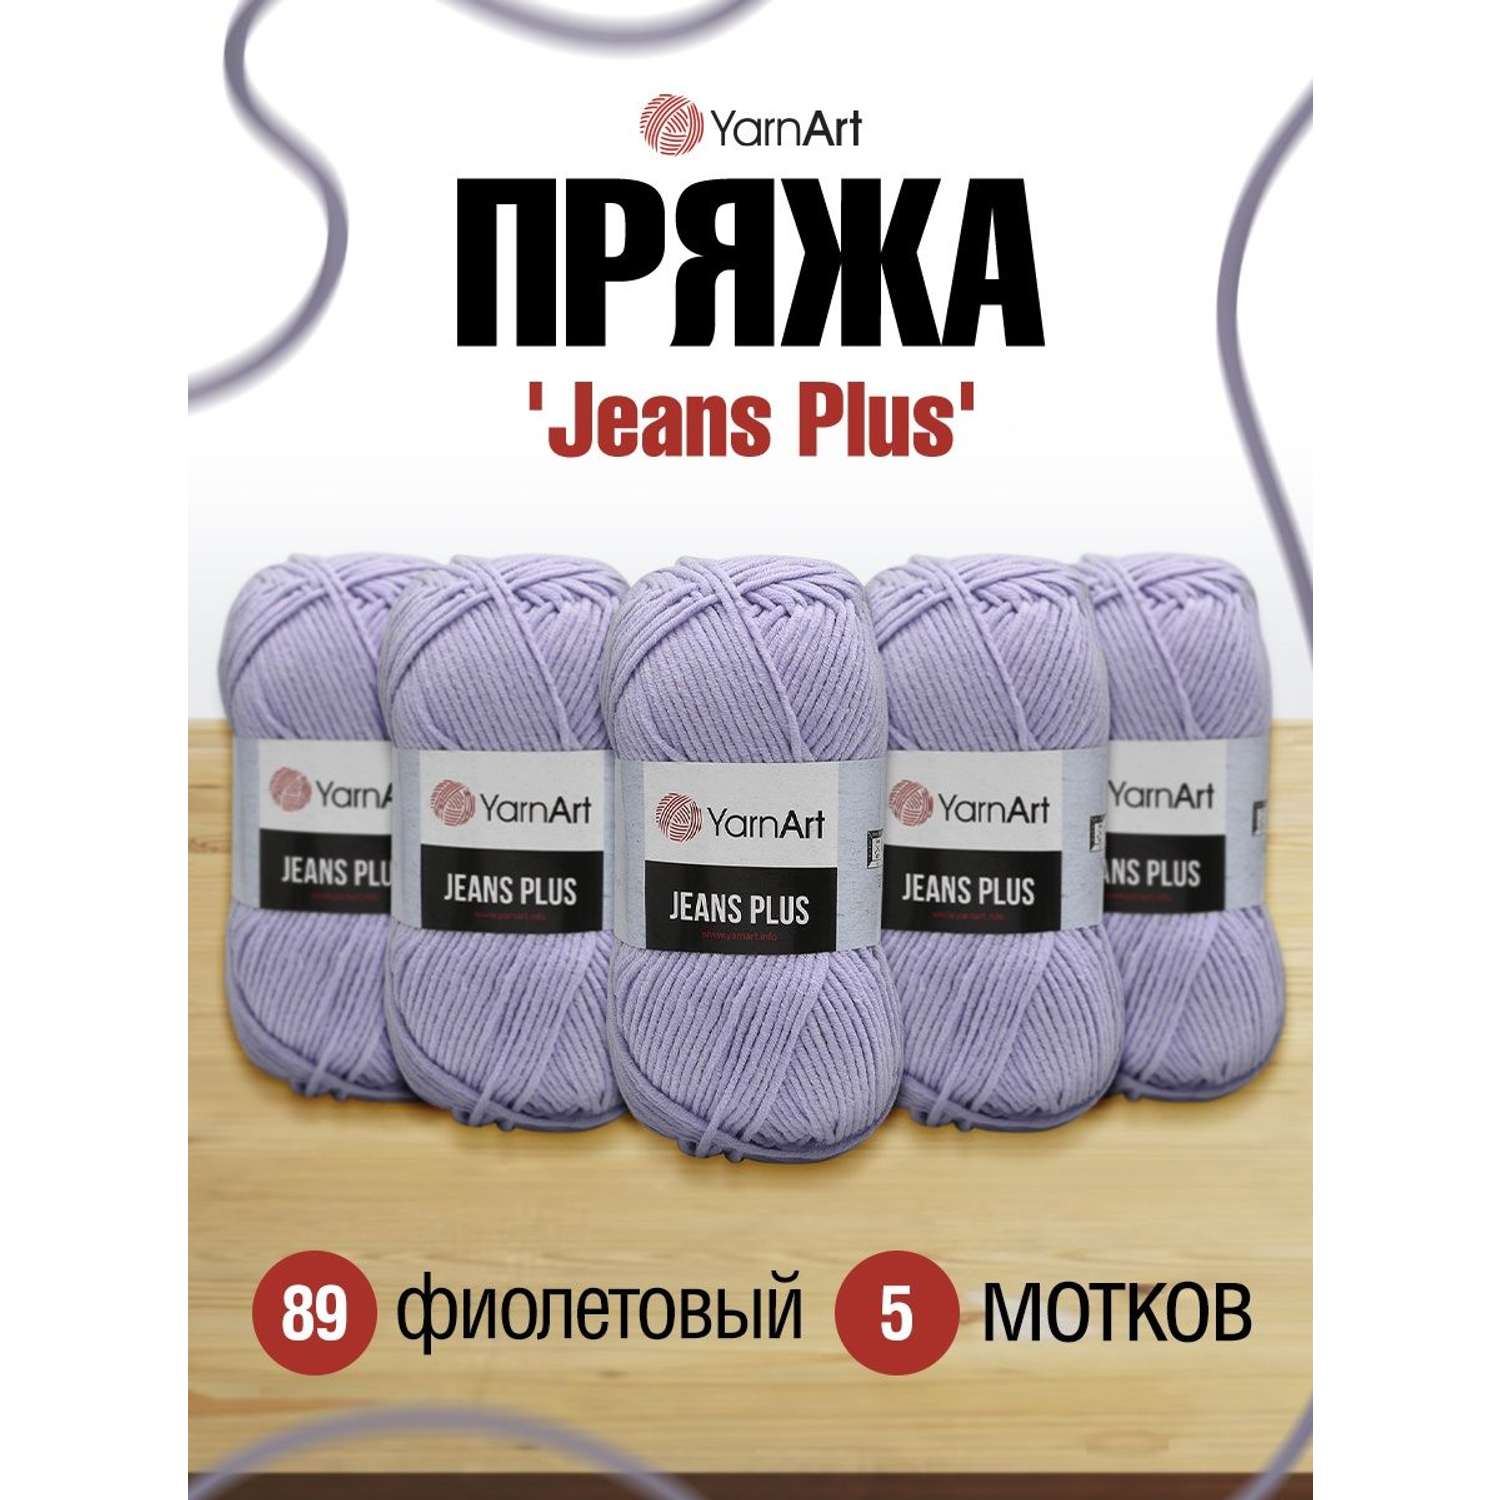 Пряжа YarnArt Jeans Plus объемная летняя 100 г 160 м 89 фиолетовый 5 мотков - фото 1